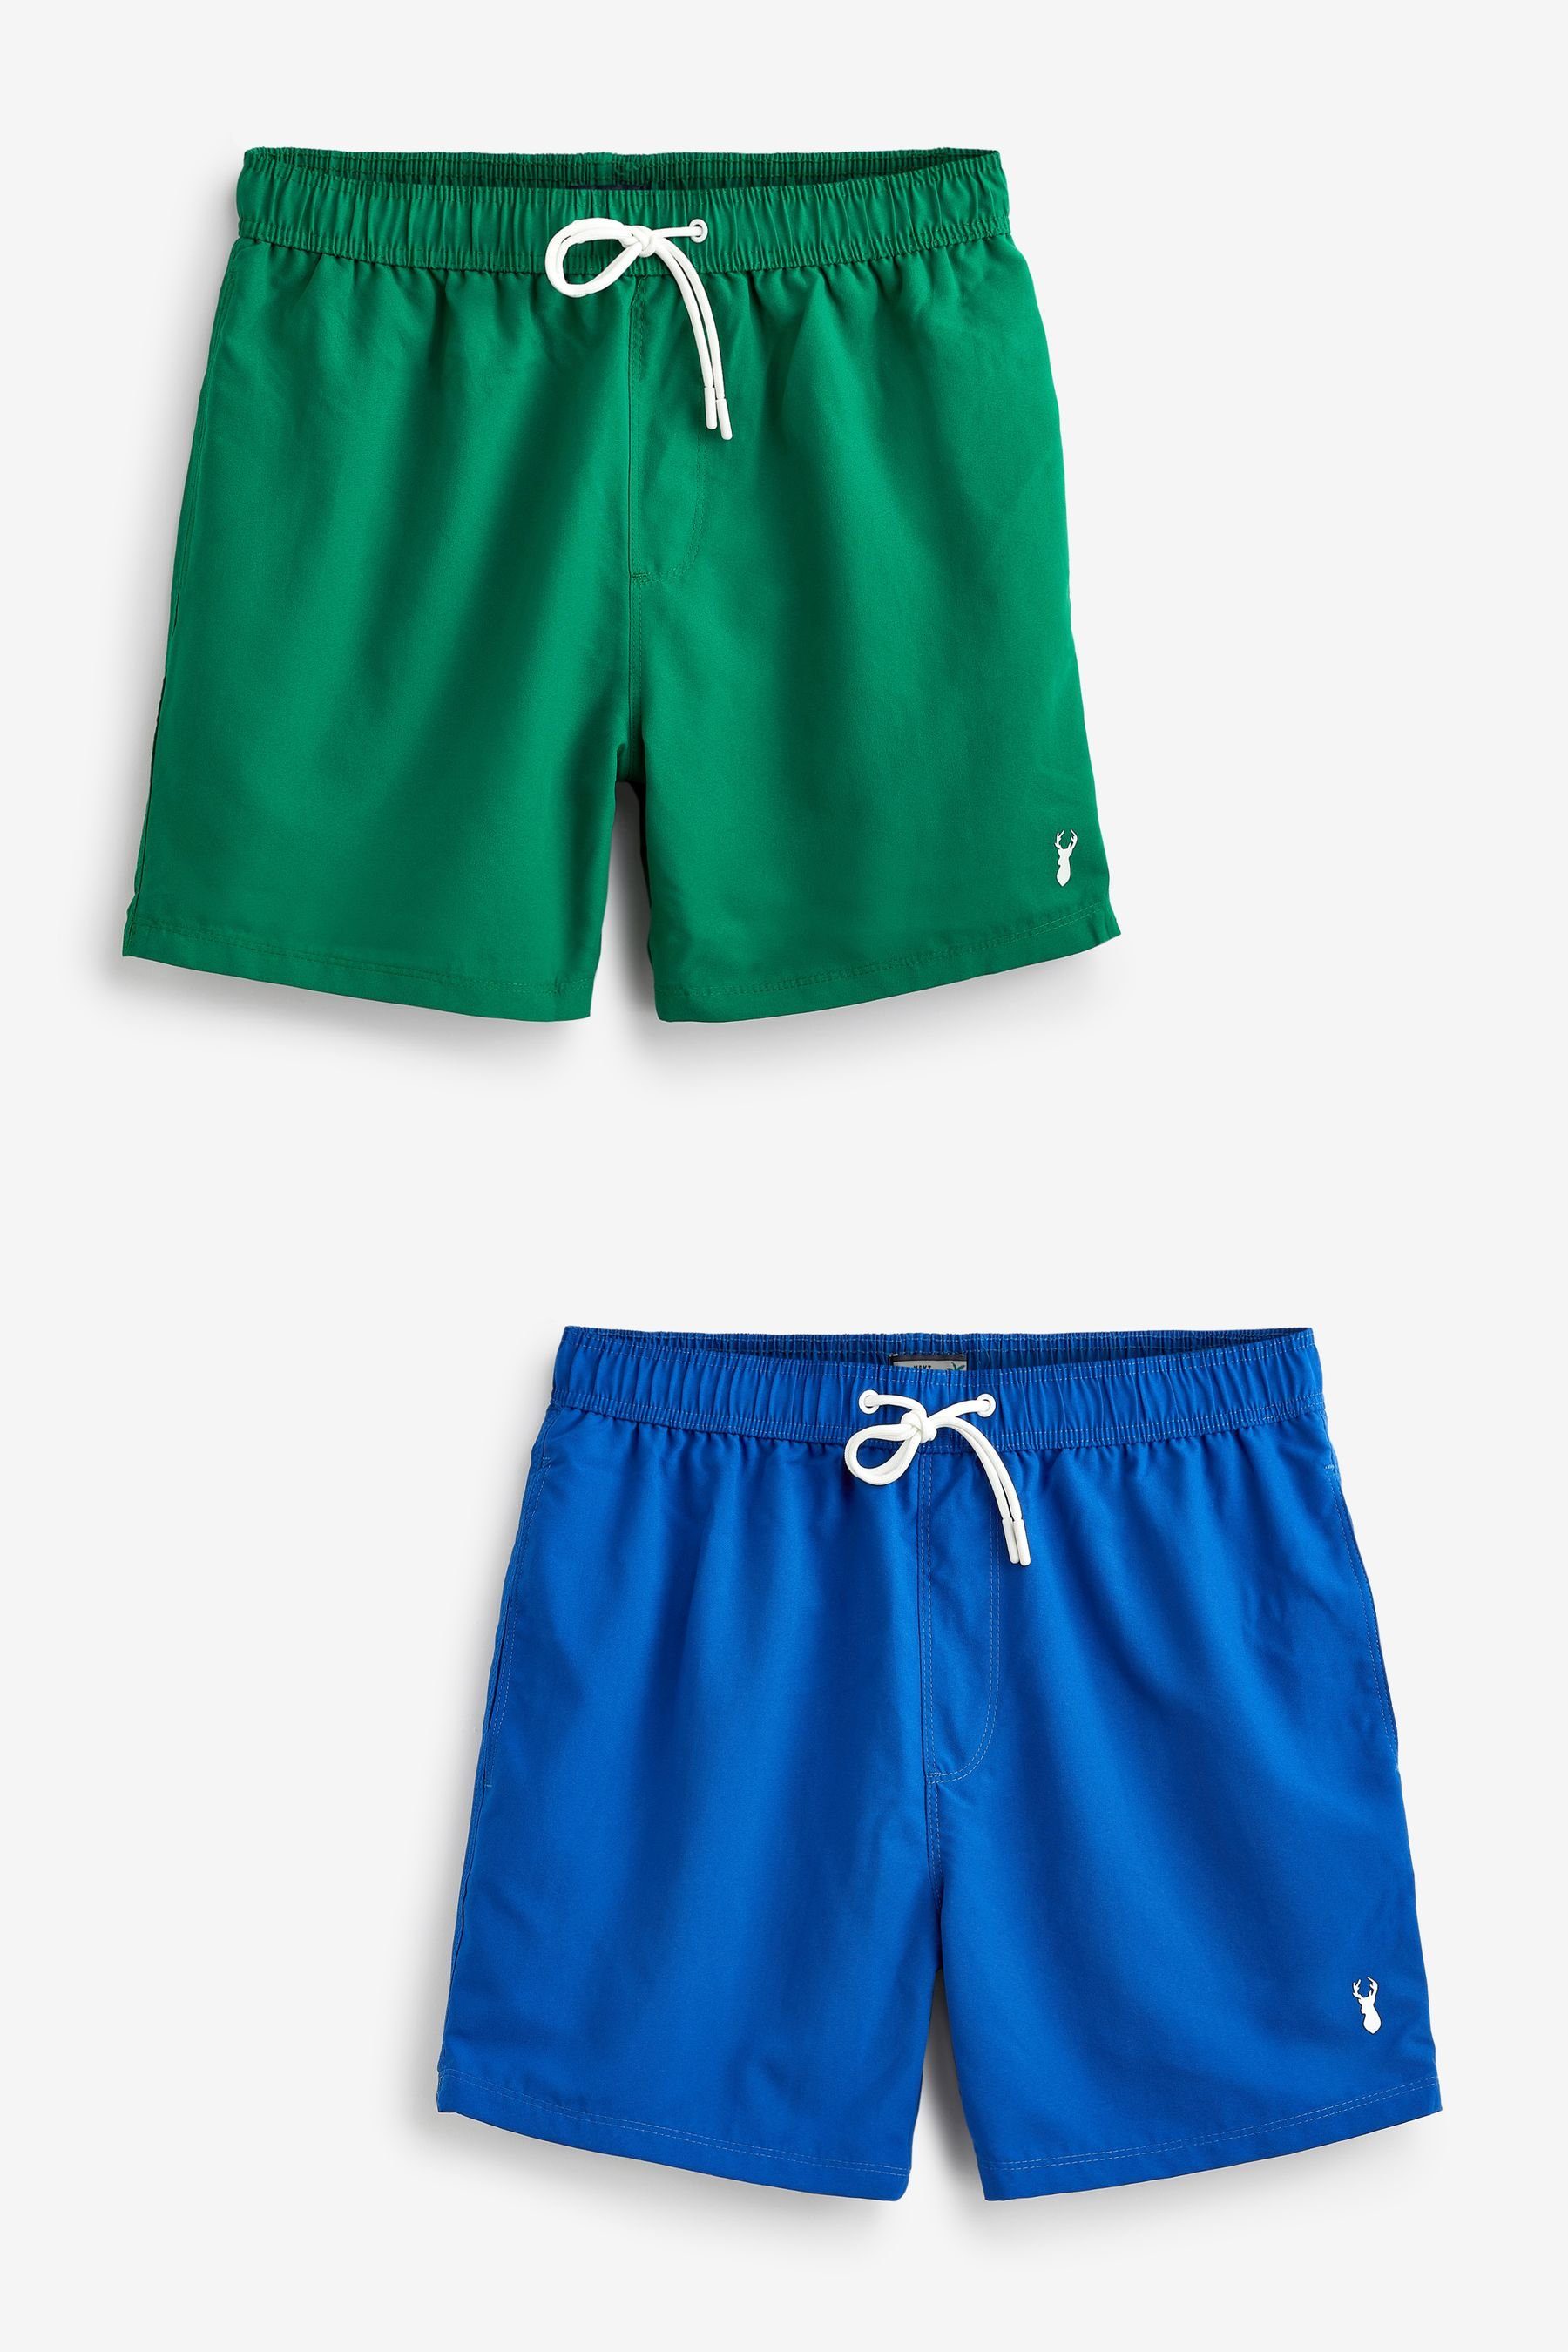 Next Badeshorts Badeshorts, 2er Pack (2-St) Cobalt Blue/Tennis Green 2 pack